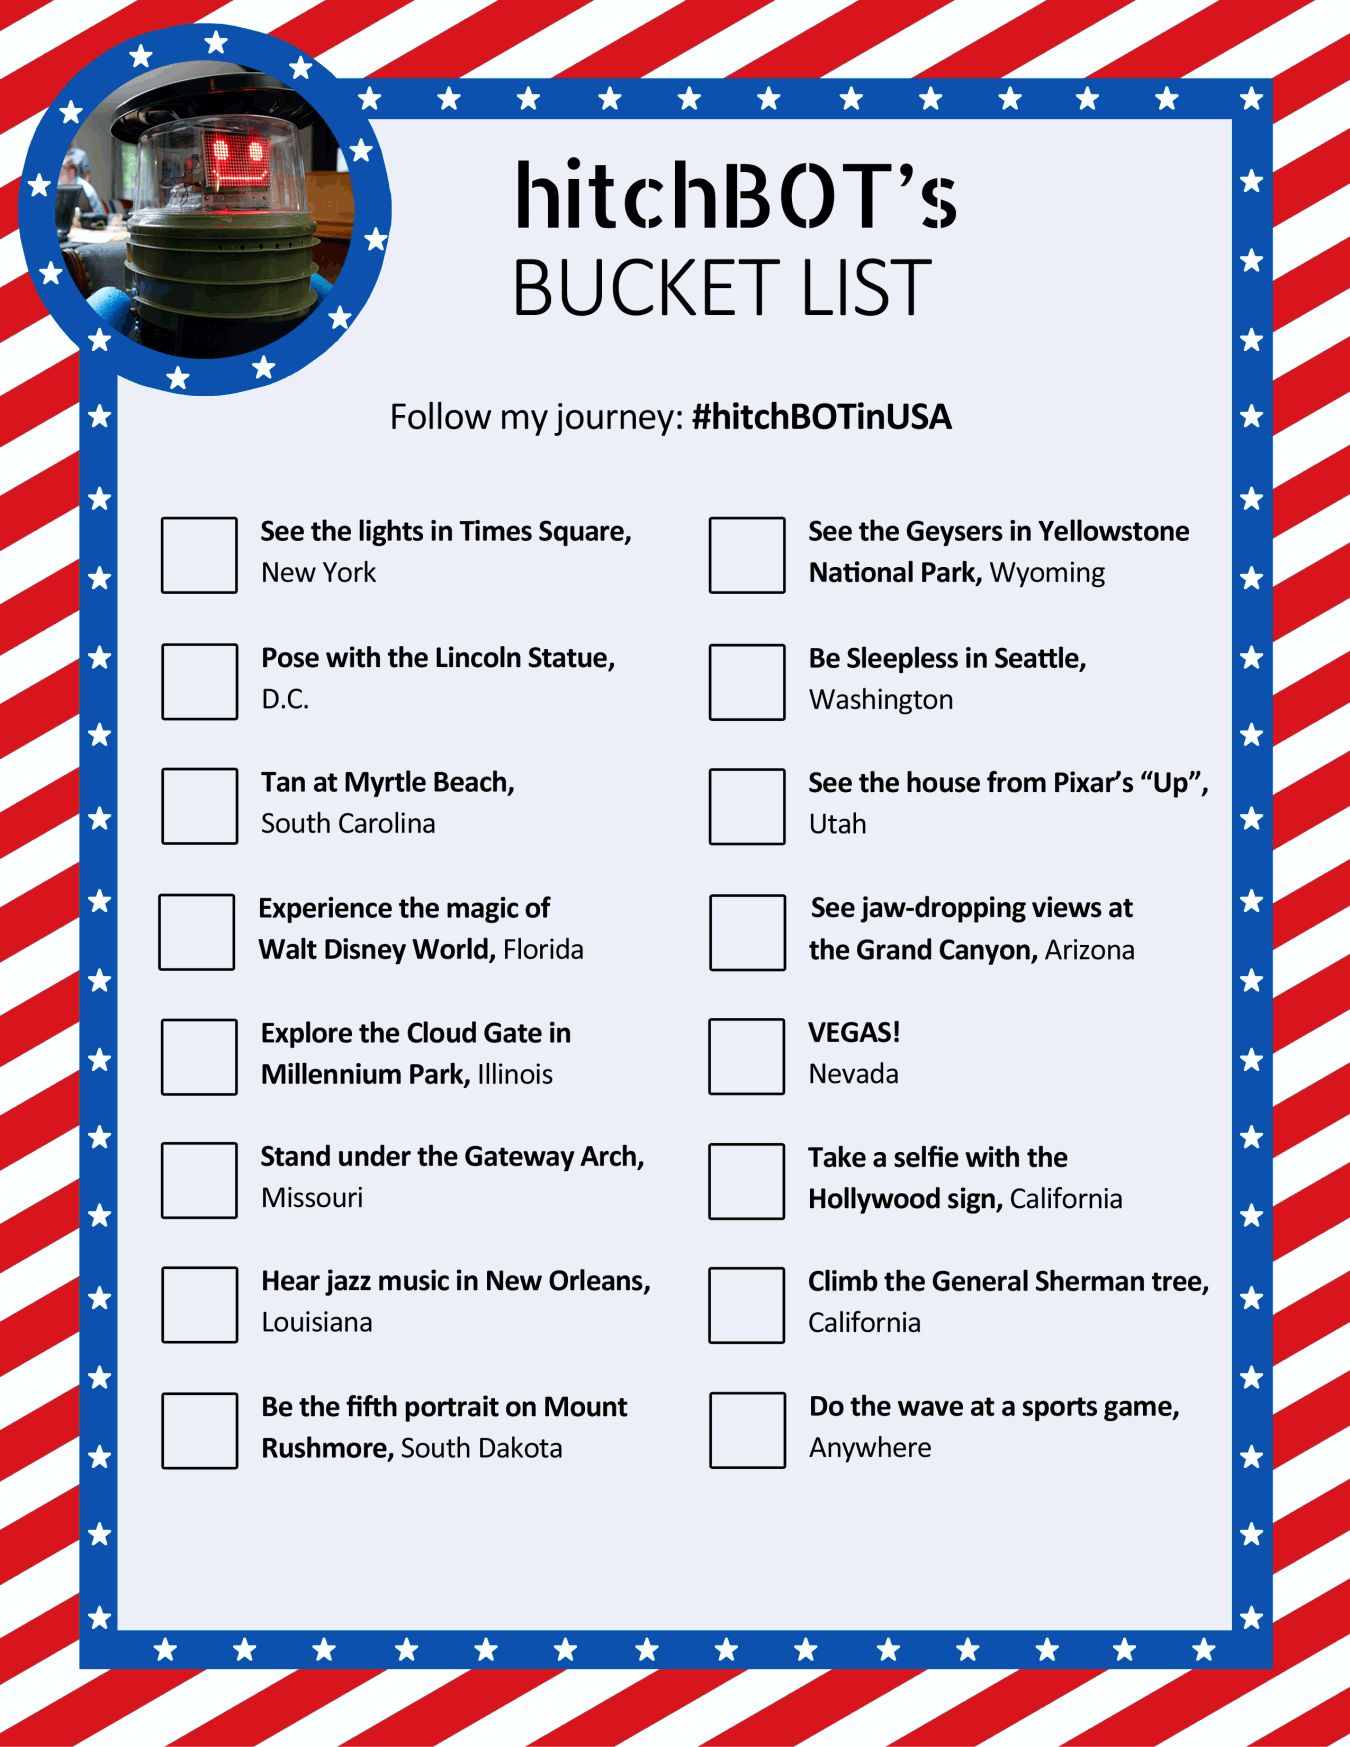 hitchbot's bucket list